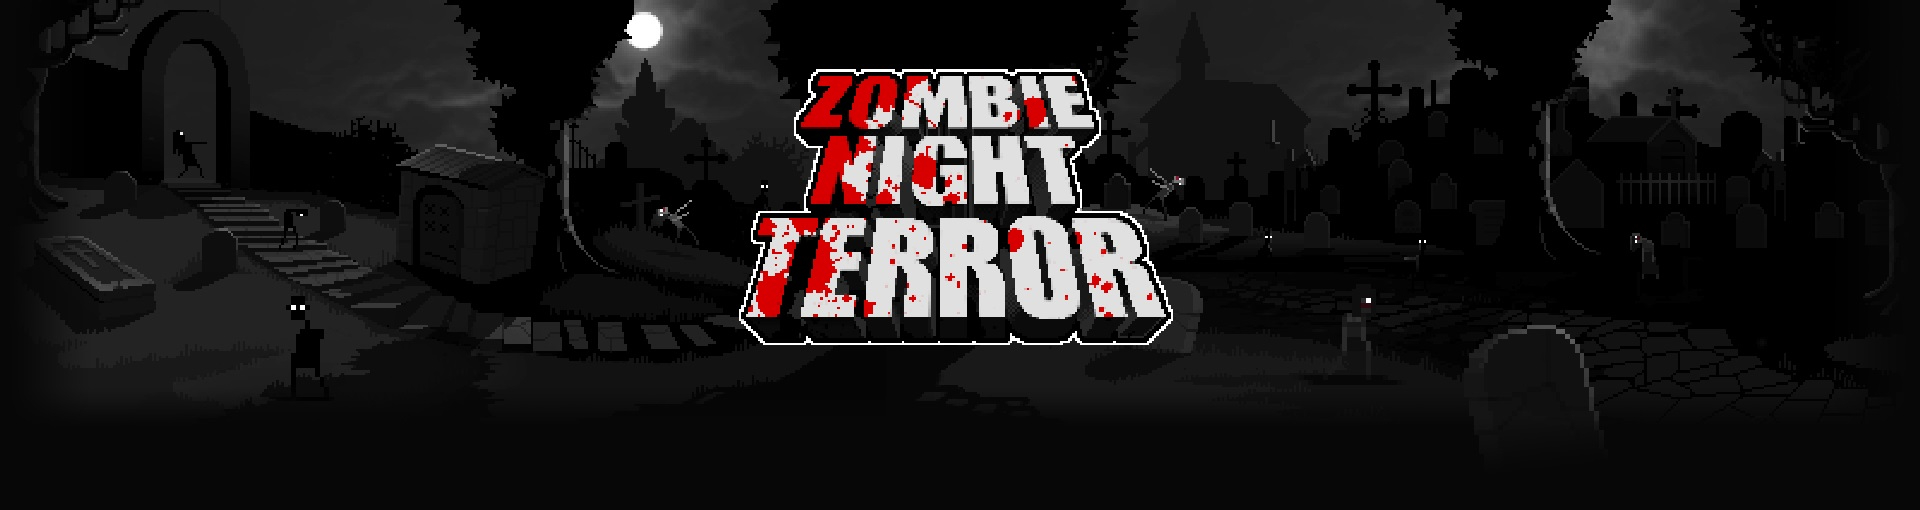 free download night zombie terror